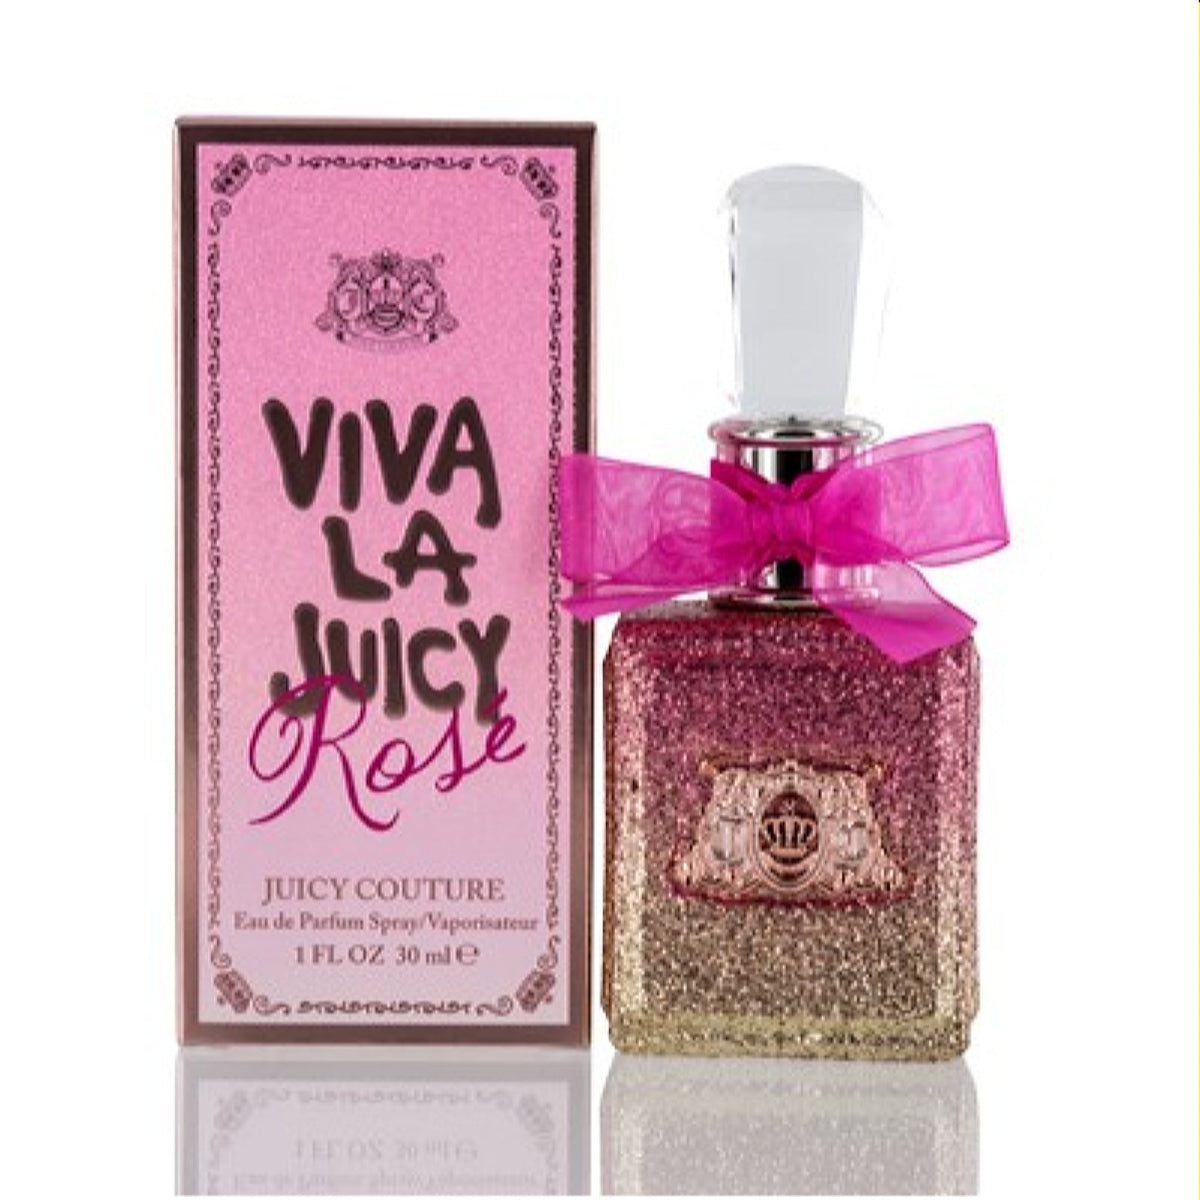 Viva La Juicy Rose Juicy Couture Edp Spray 1.0 Oz (30 Ml) For Women  VJRF40003